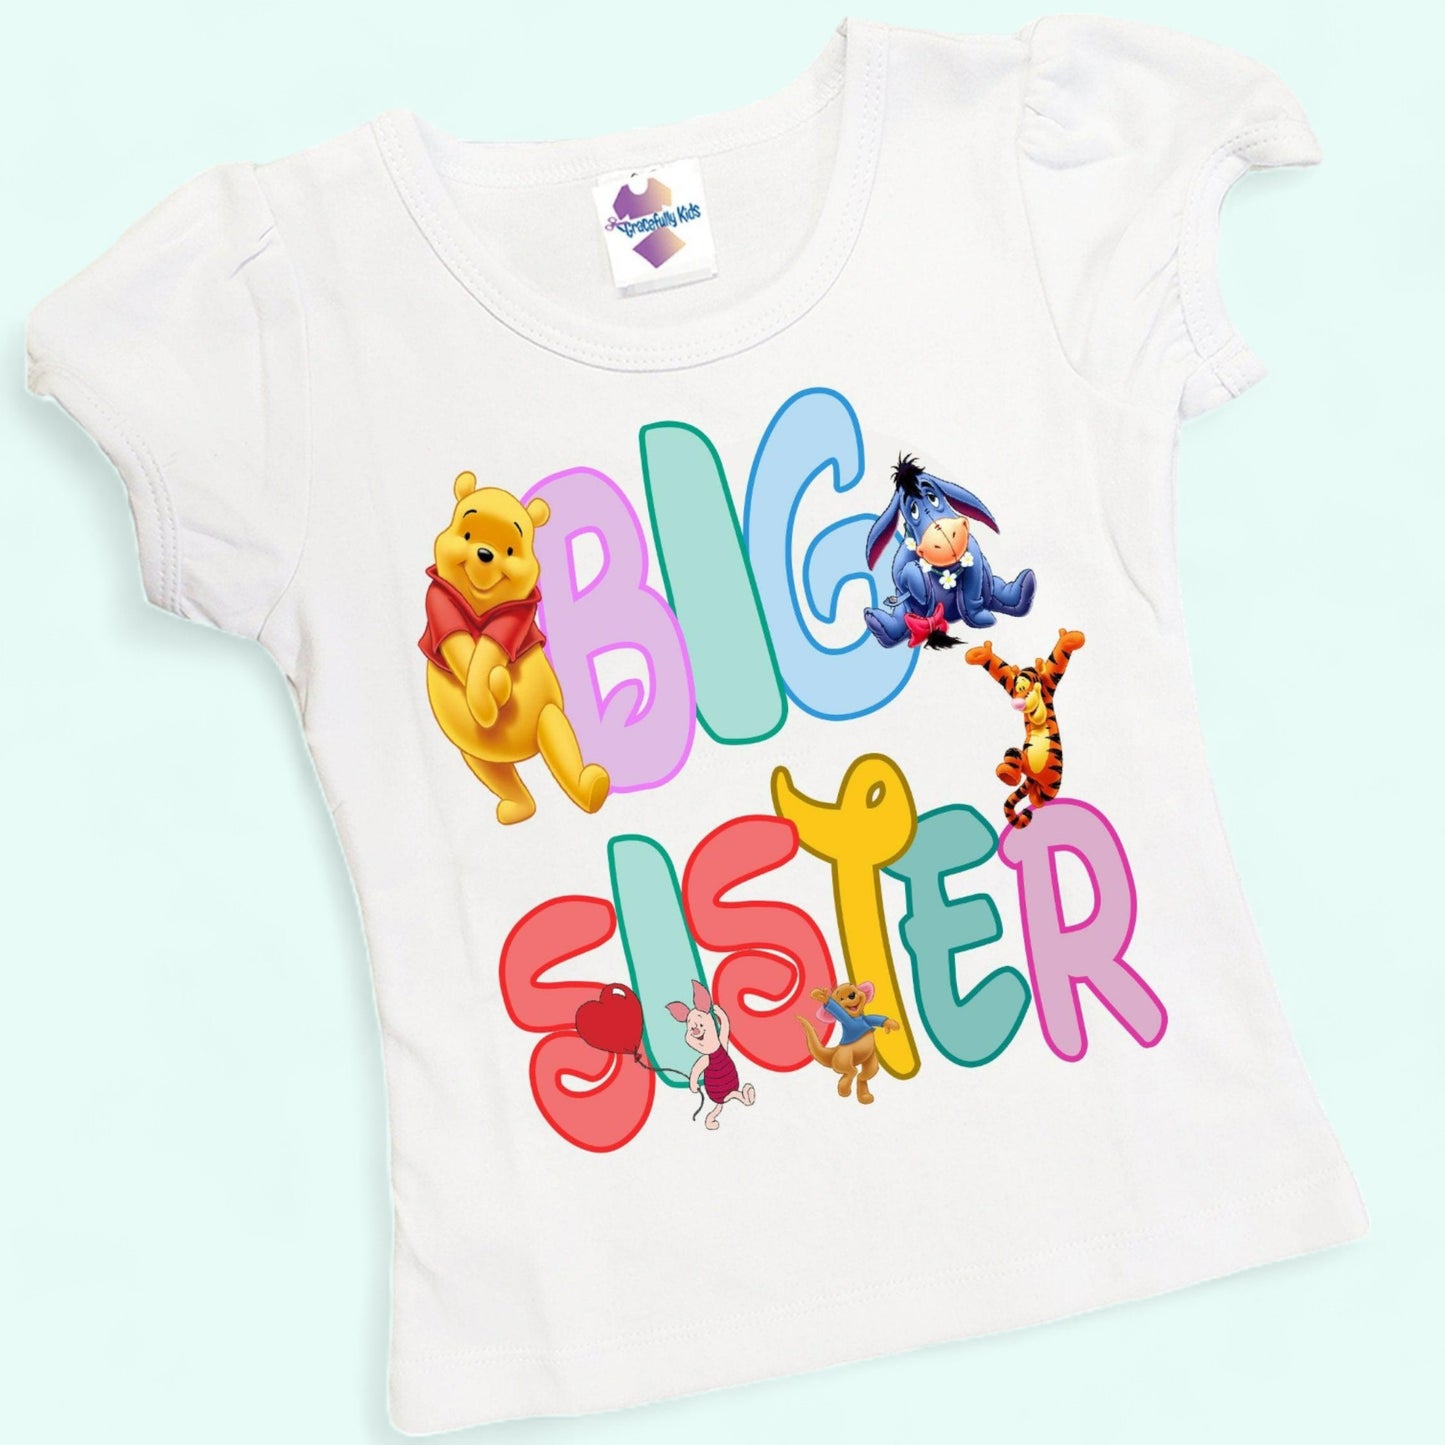 Pooh and friends big sister shirt